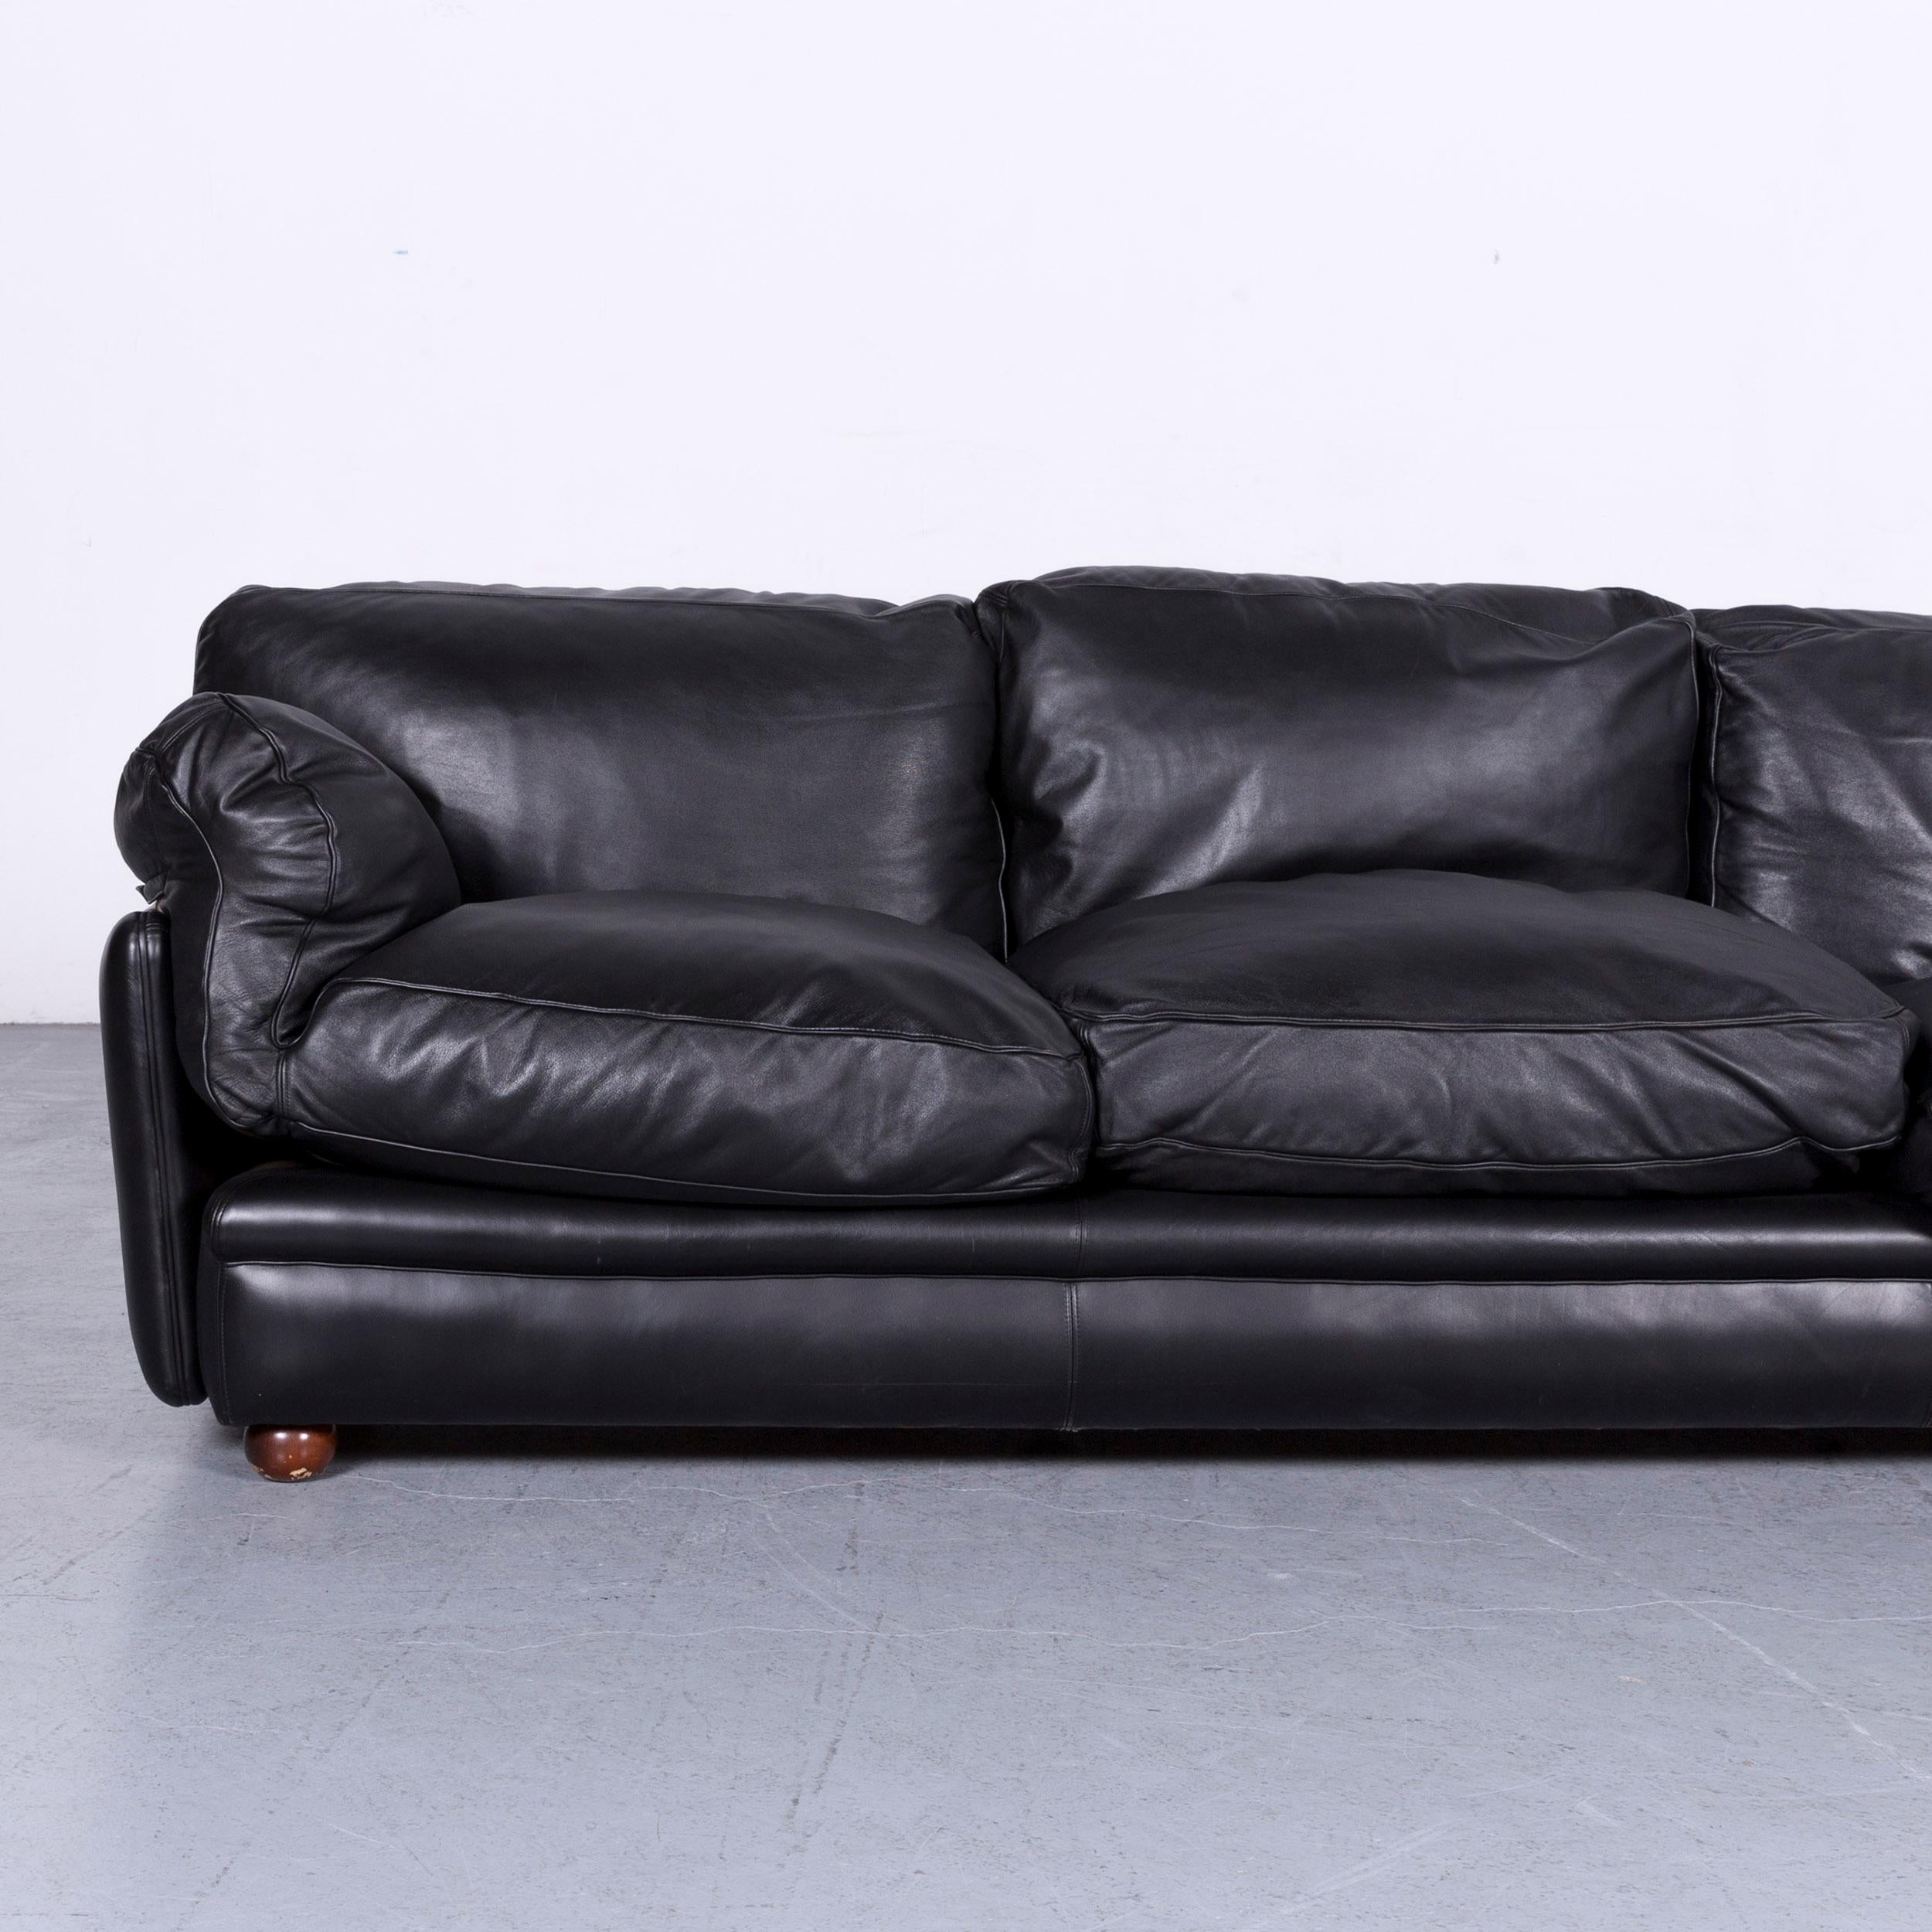 Modern Poltrona Frau Leather Sofa Black Genuine Leather Three-Seat Couch For Sale